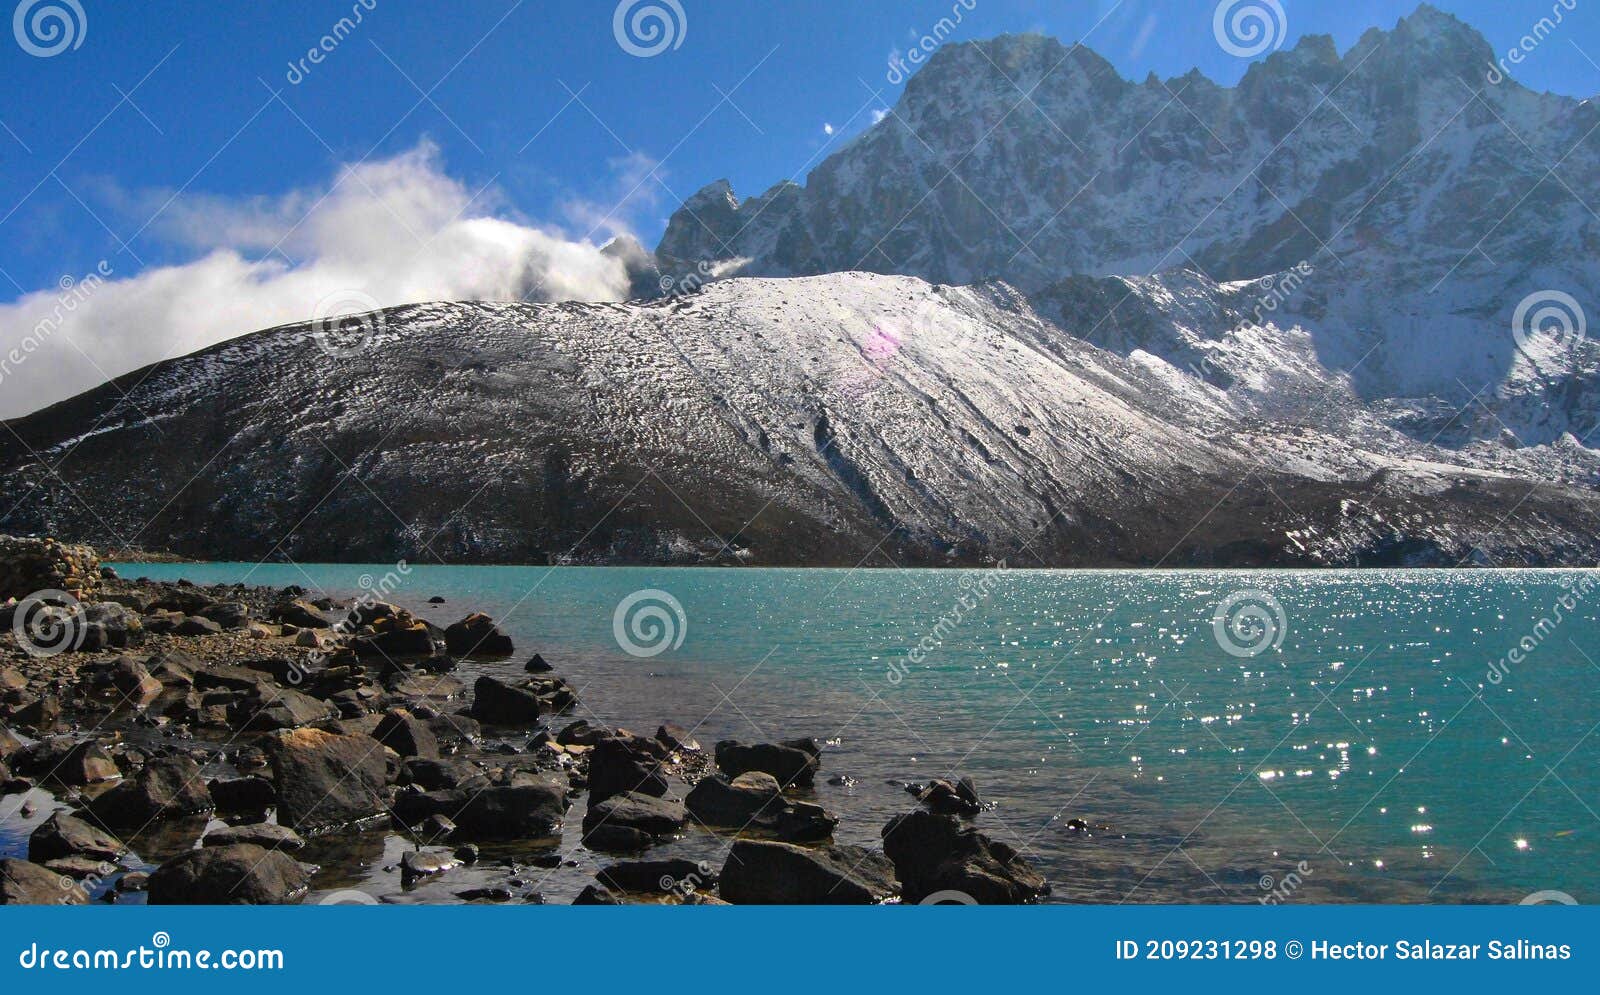 nepal water lake rocks cold blue white everest high